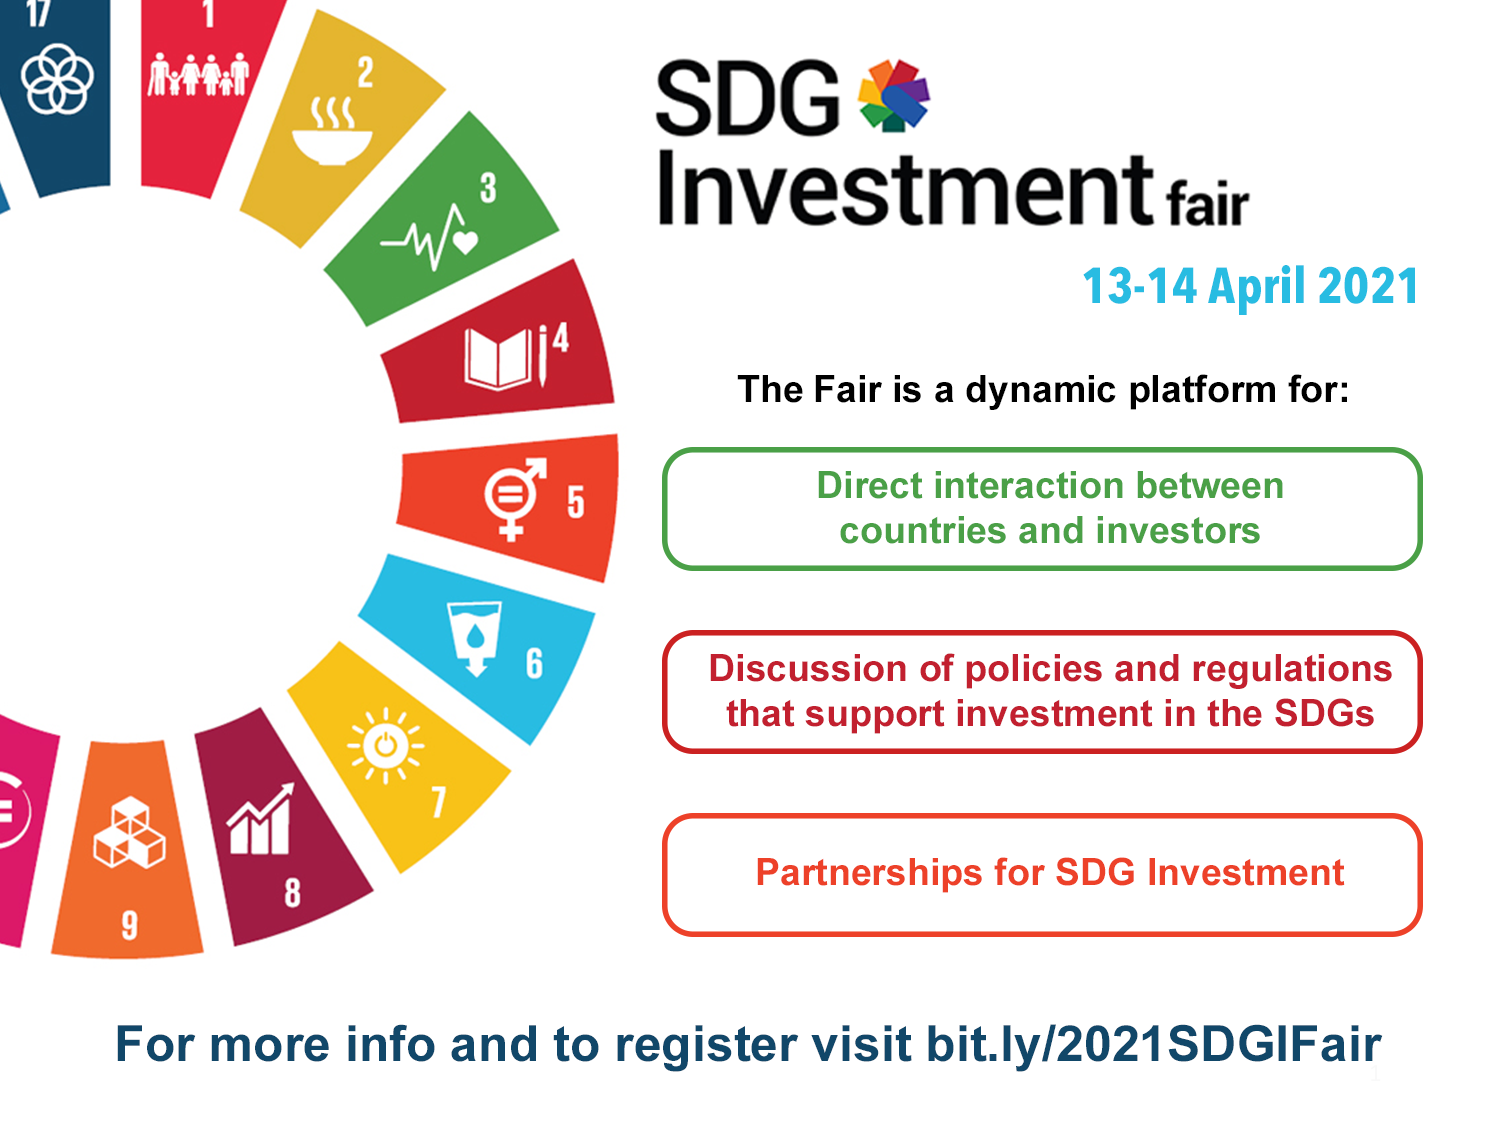 Flyer providing short description of the goals of the SDG Investment Fair